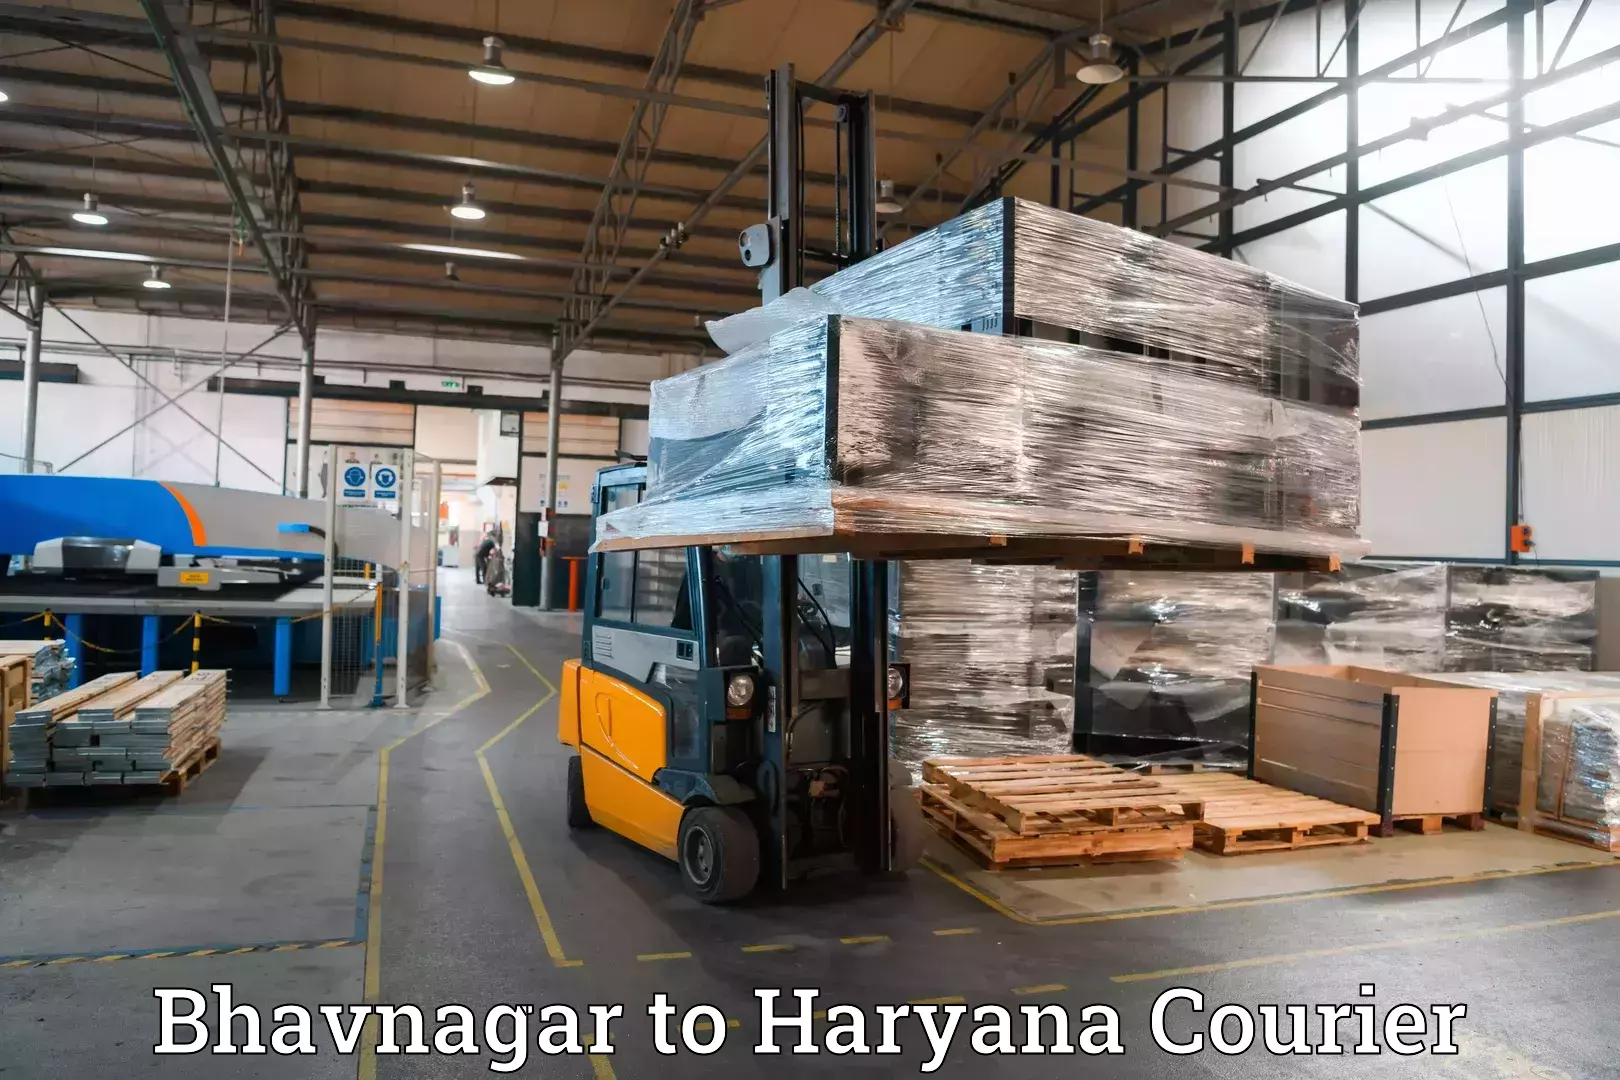 Luggage transport consultancy Bhavnagar to Haryana